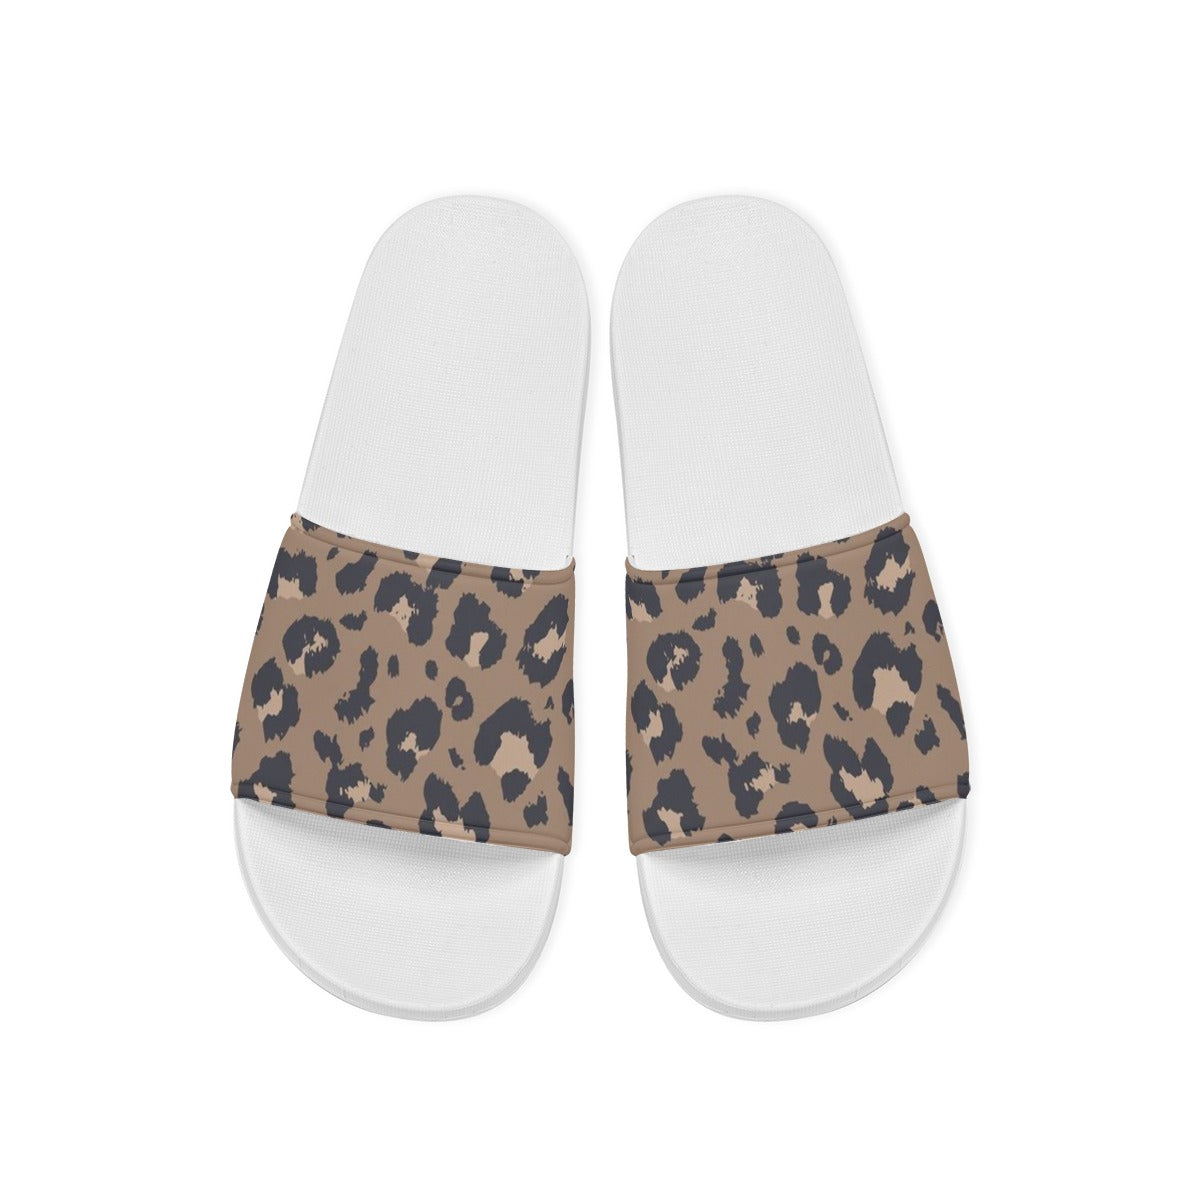 Vintage Leopard Sandals